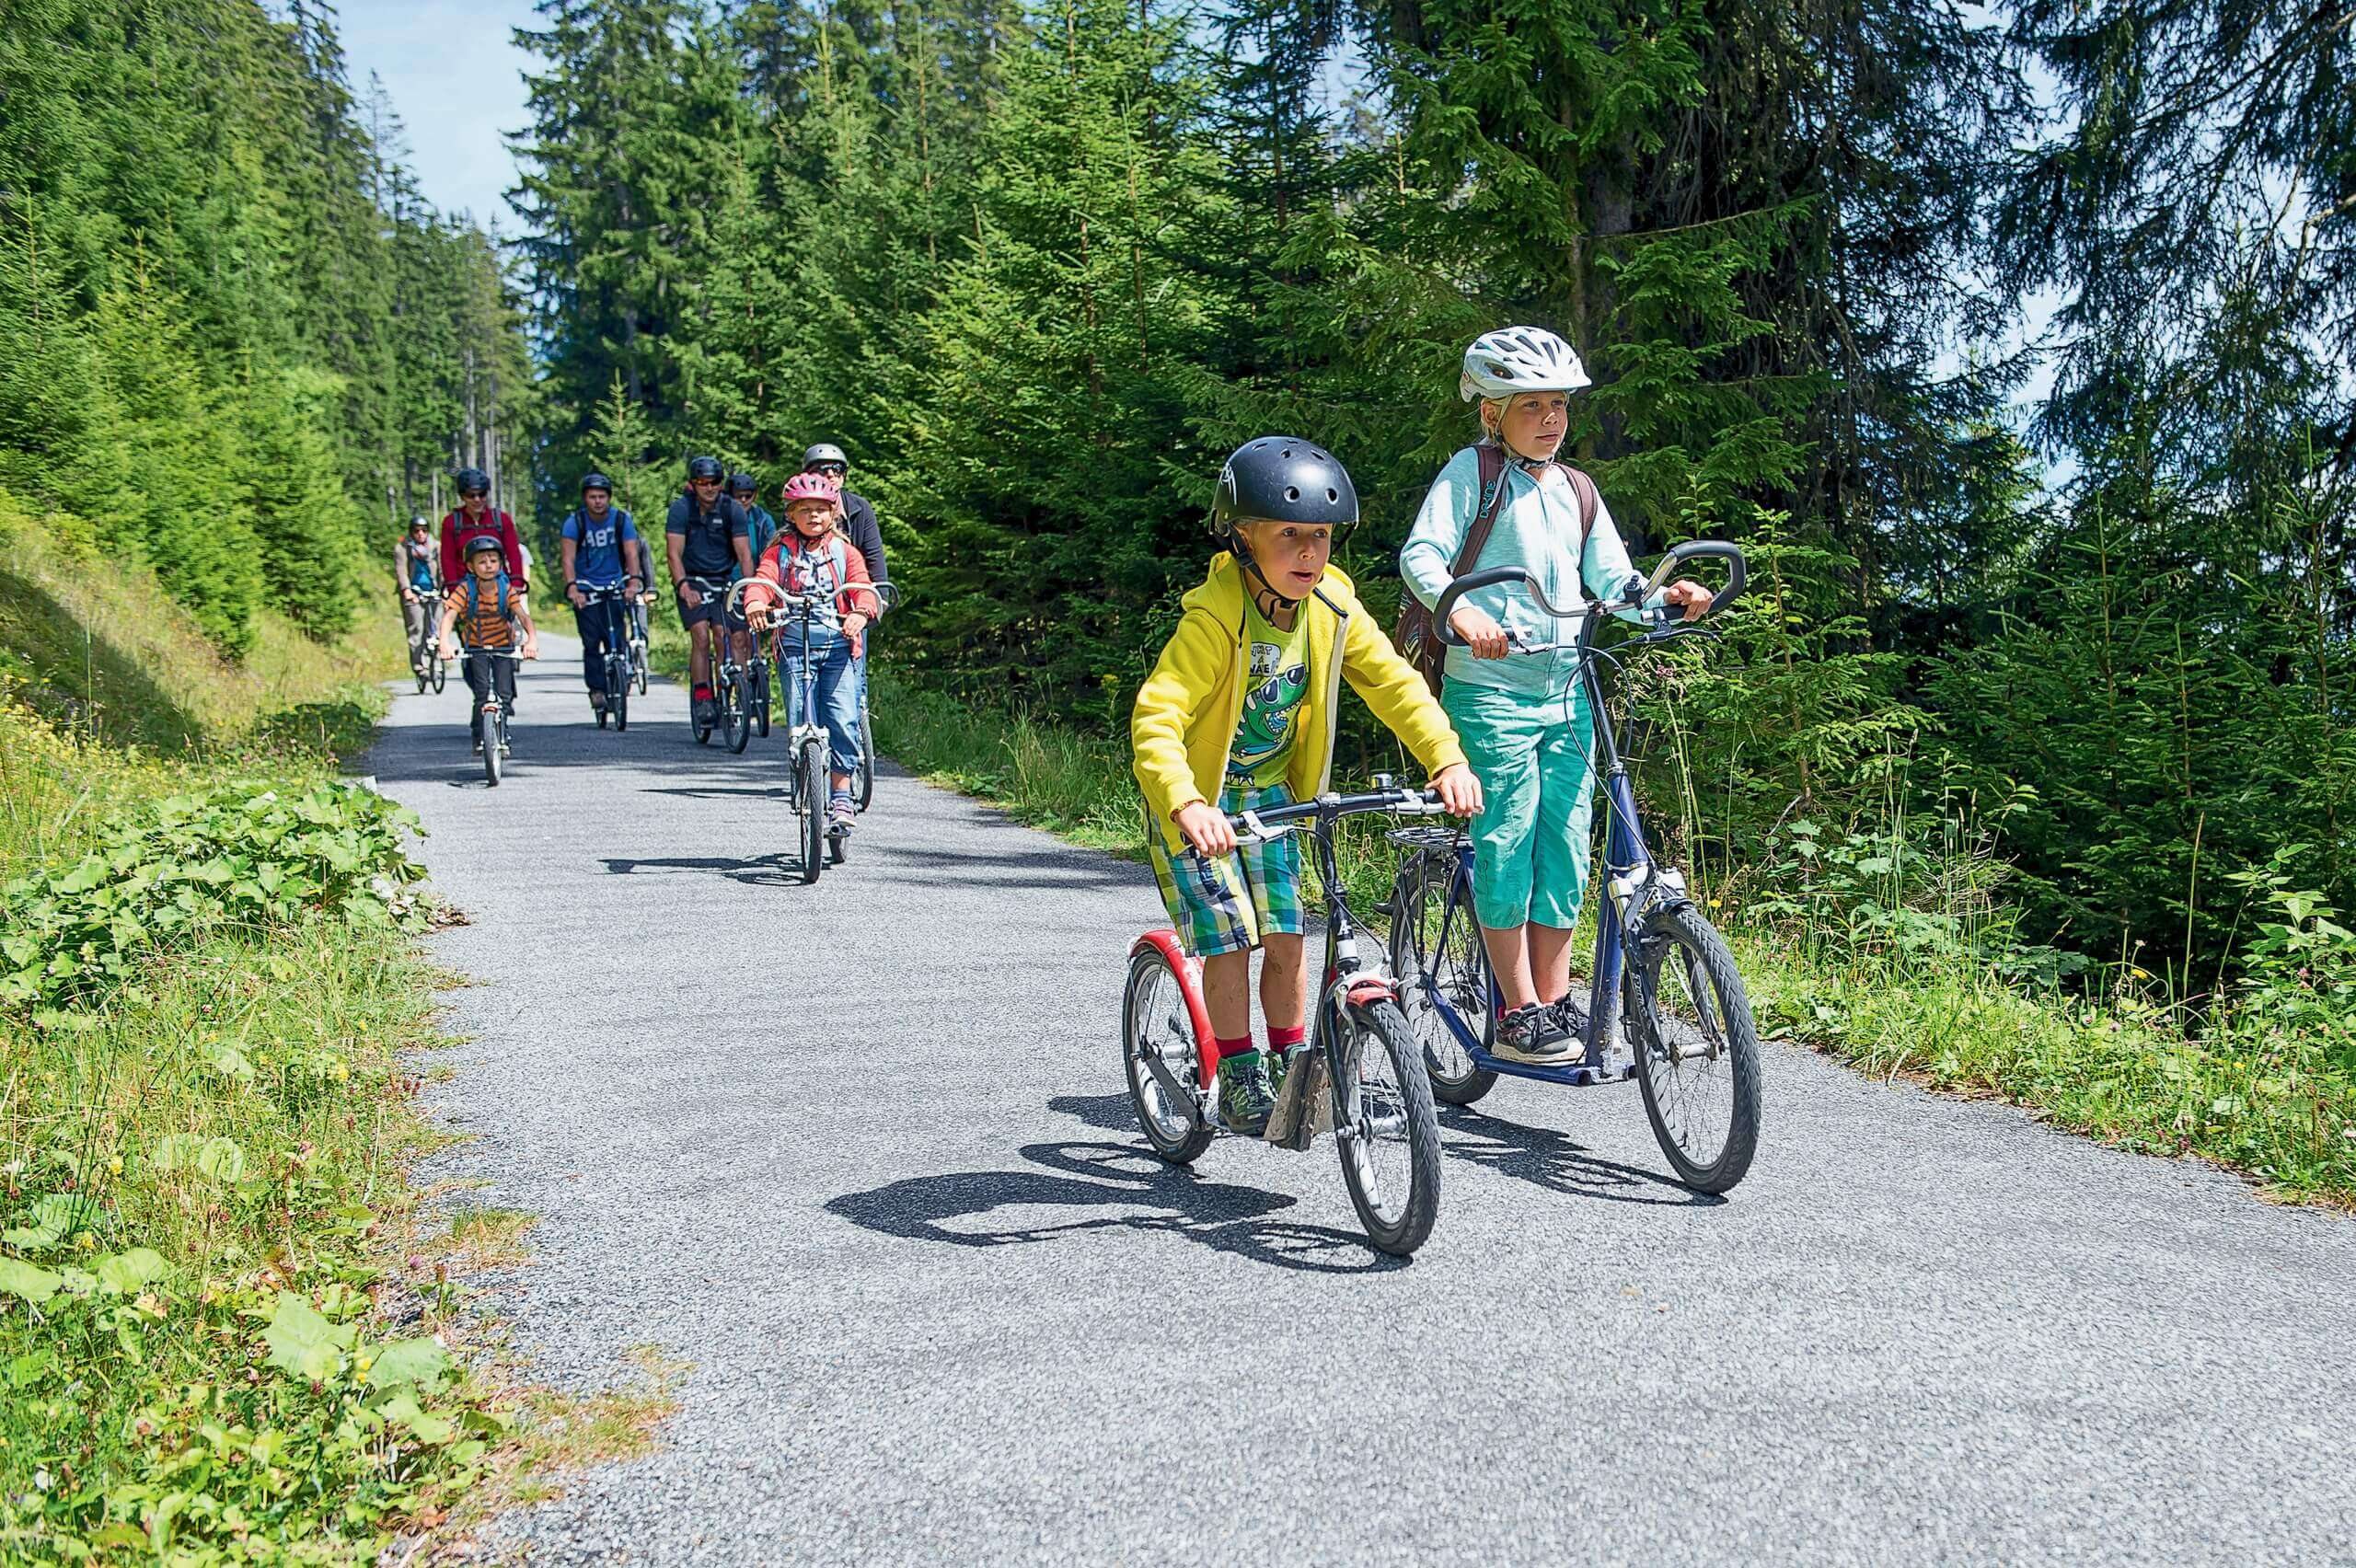 niederhorn-trotti-bike-sommer-abfahrt-gruppe-familie-spass